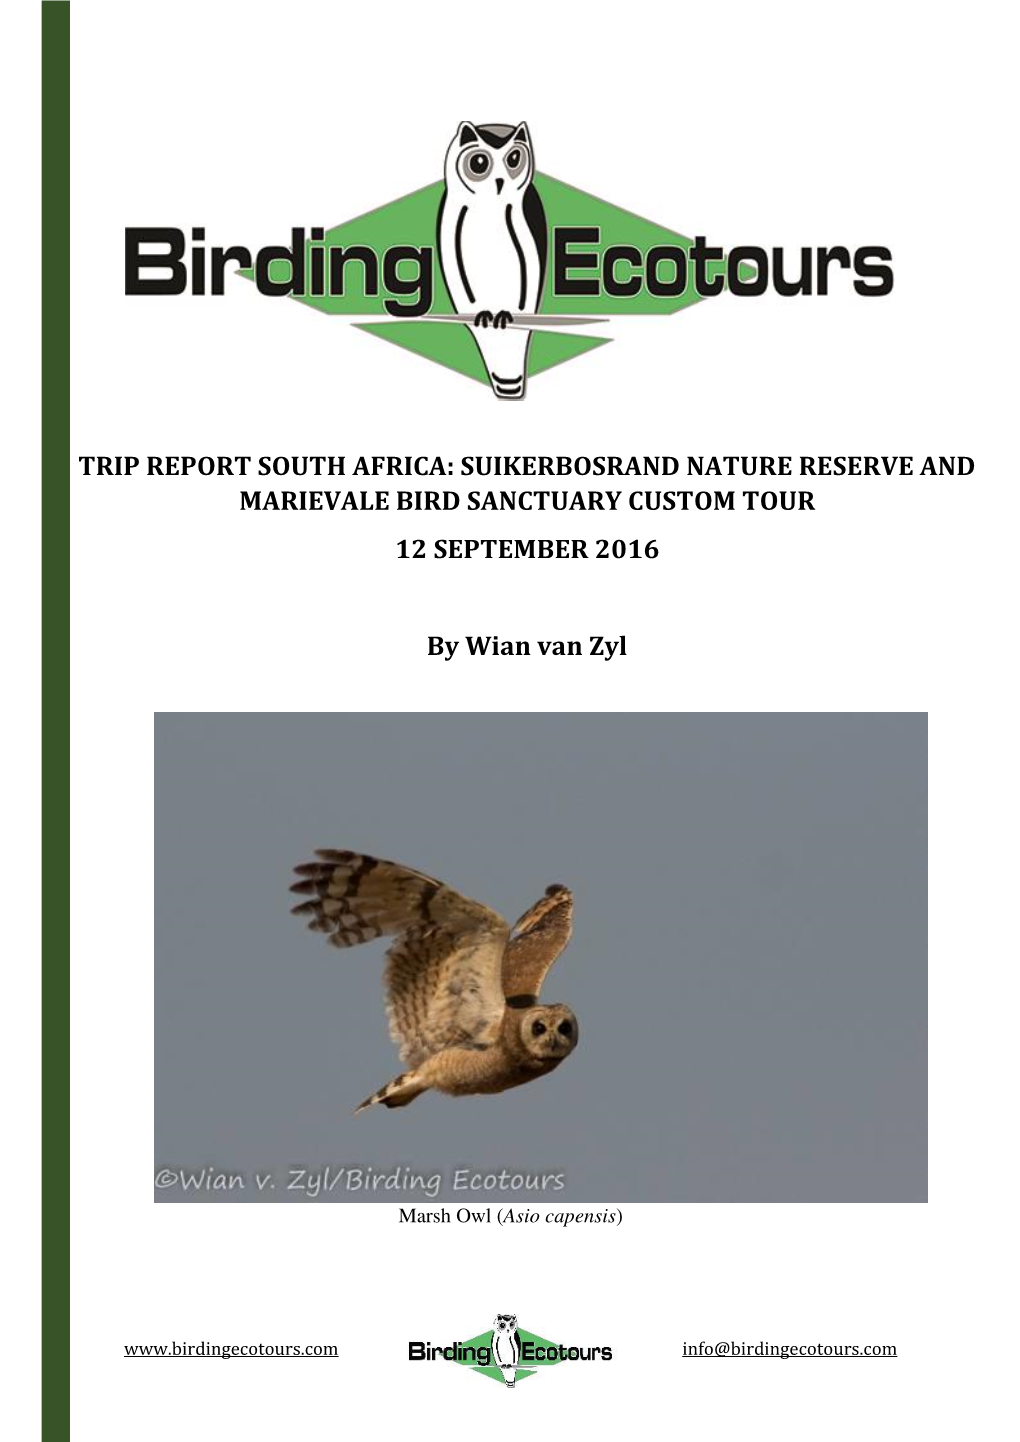 Trip Report South Africa: Suikerbosrand Nature Reserve and Marievale Bird Sanctuary Custom Tour 12 September 2016